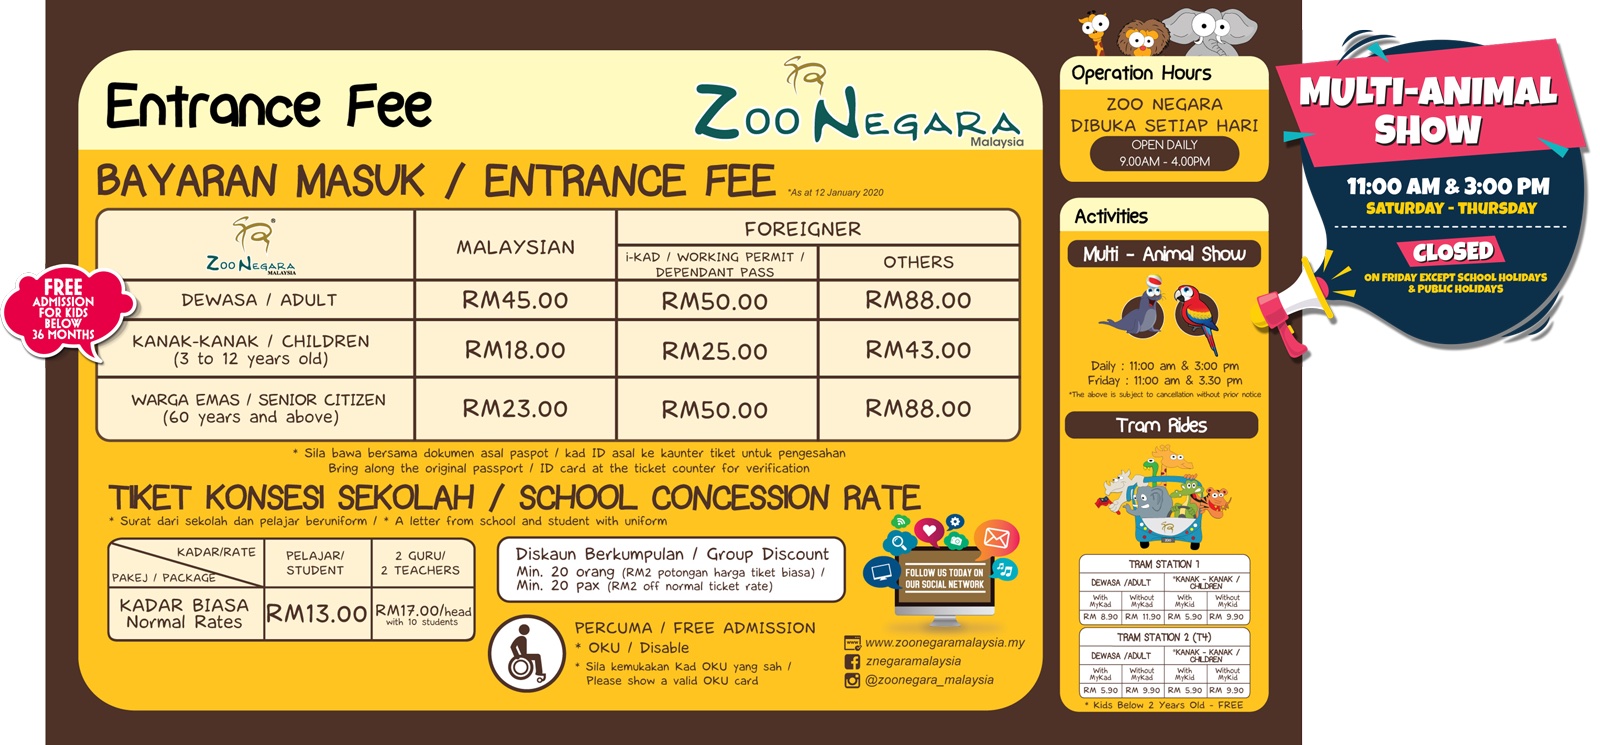 Zoo Negara Malaysia entrance fees